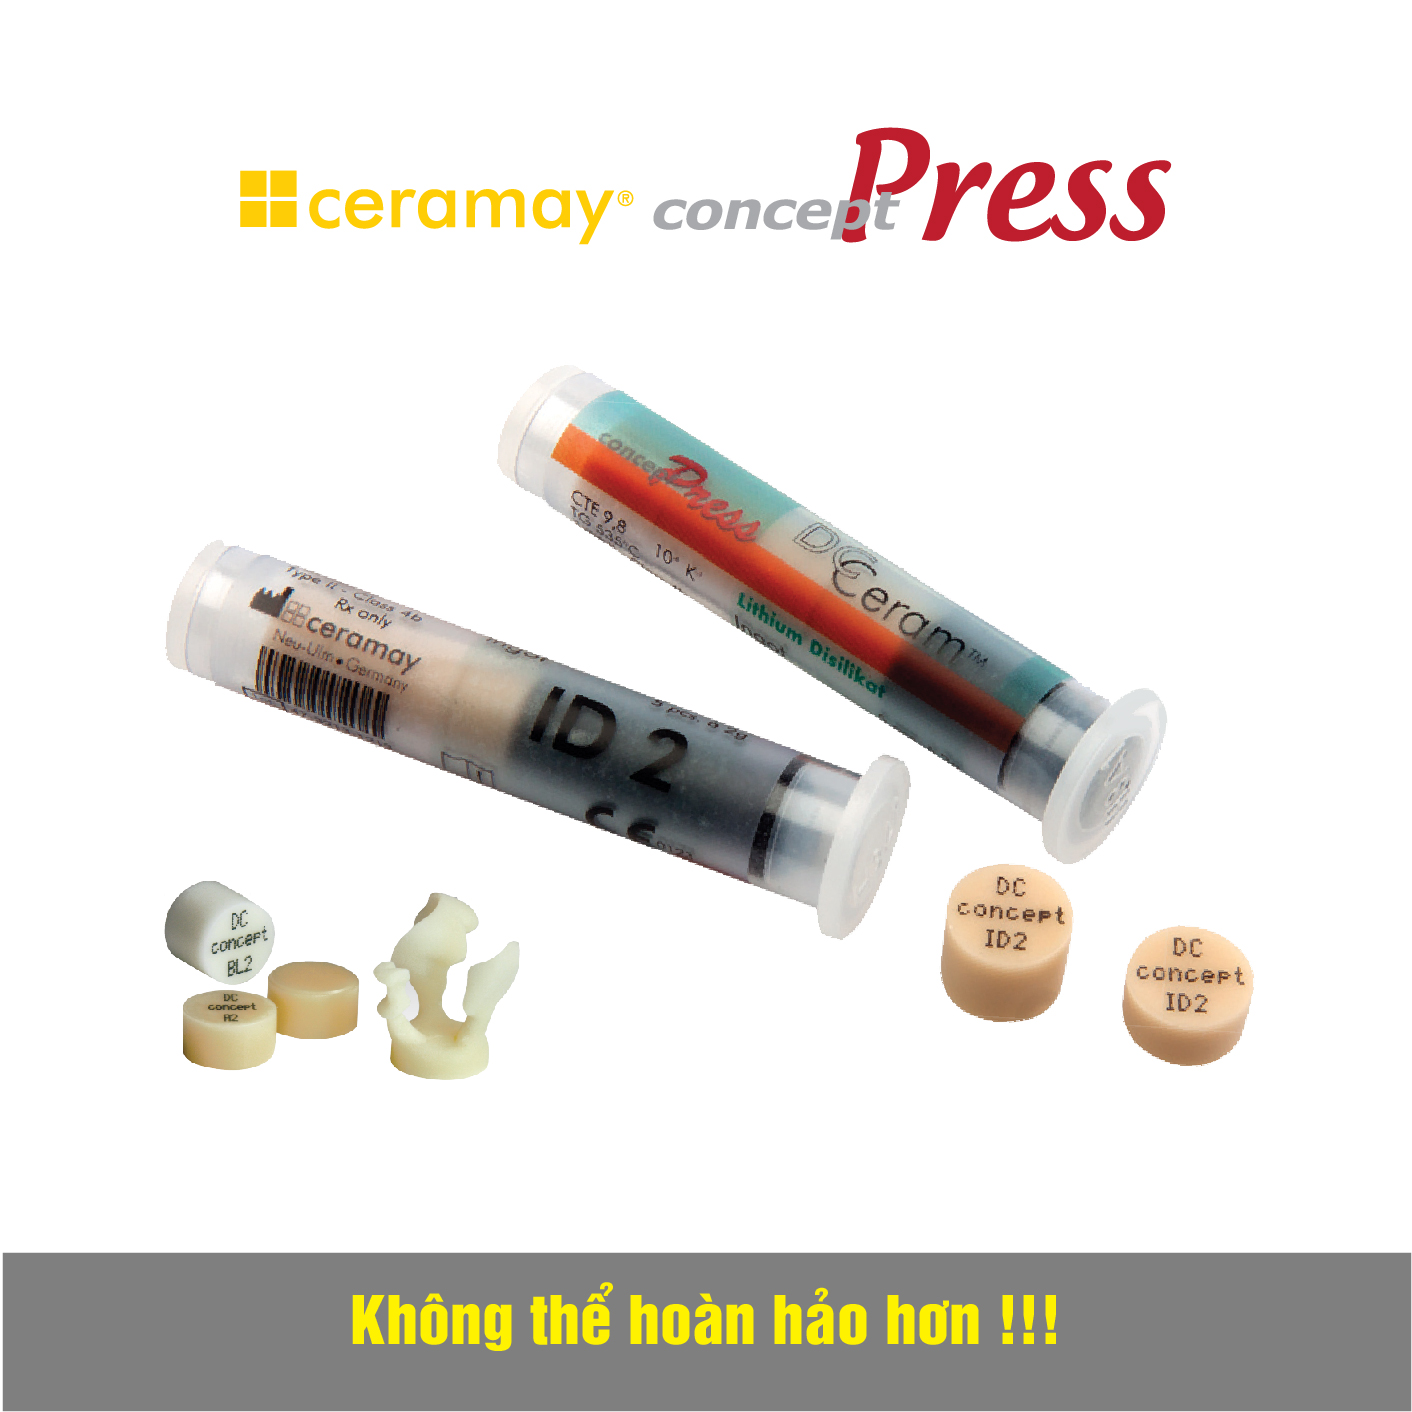 Ceramay Concept Press